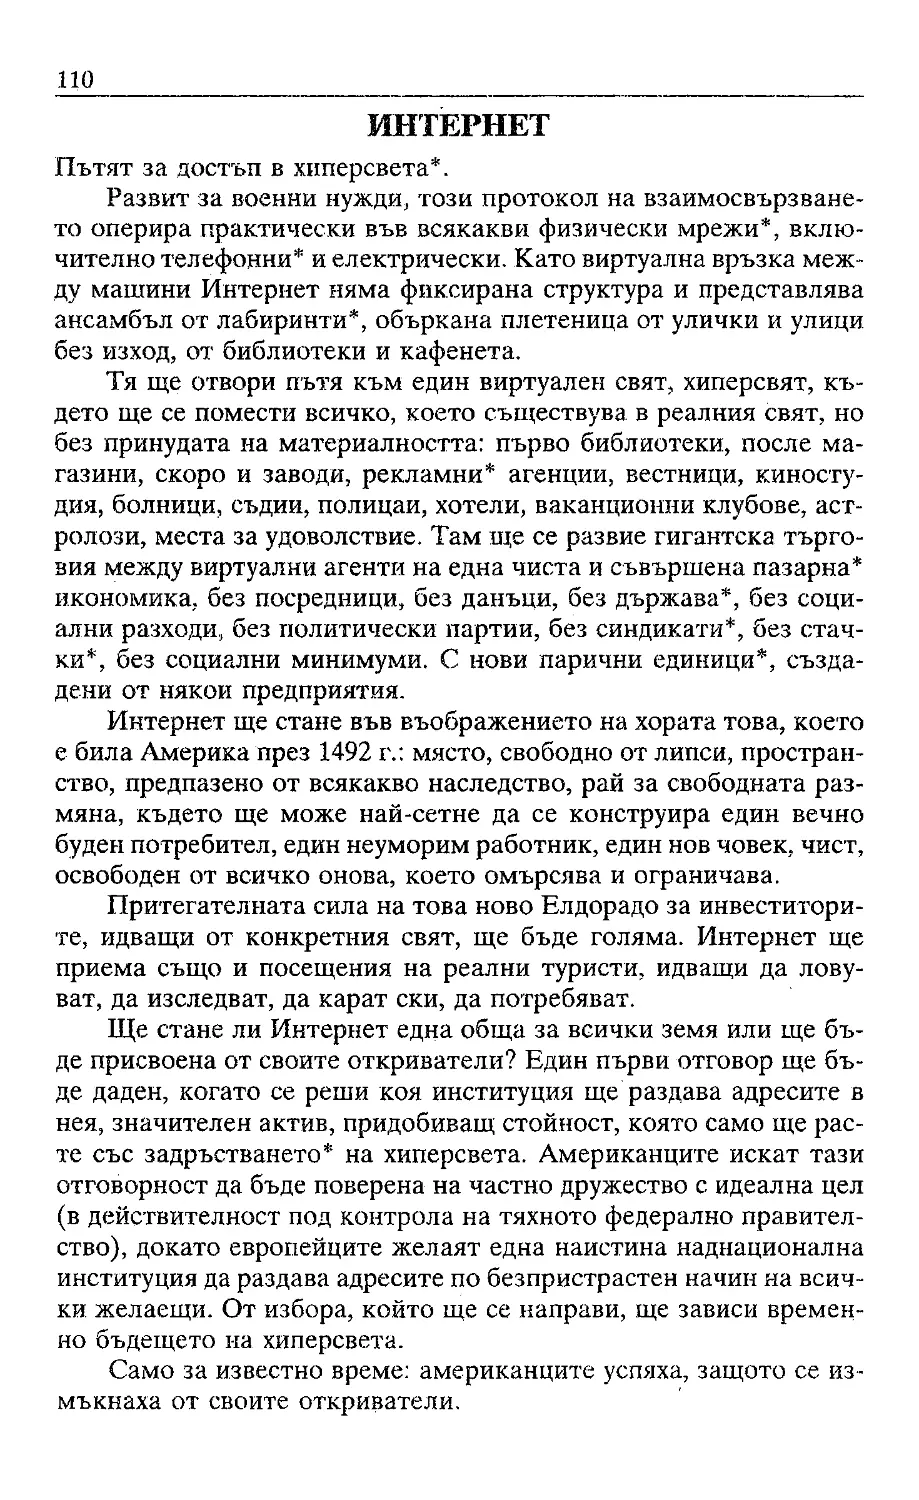 ﻿Жак Атали. Речник на 21 век_Page_054_Image_0001_1